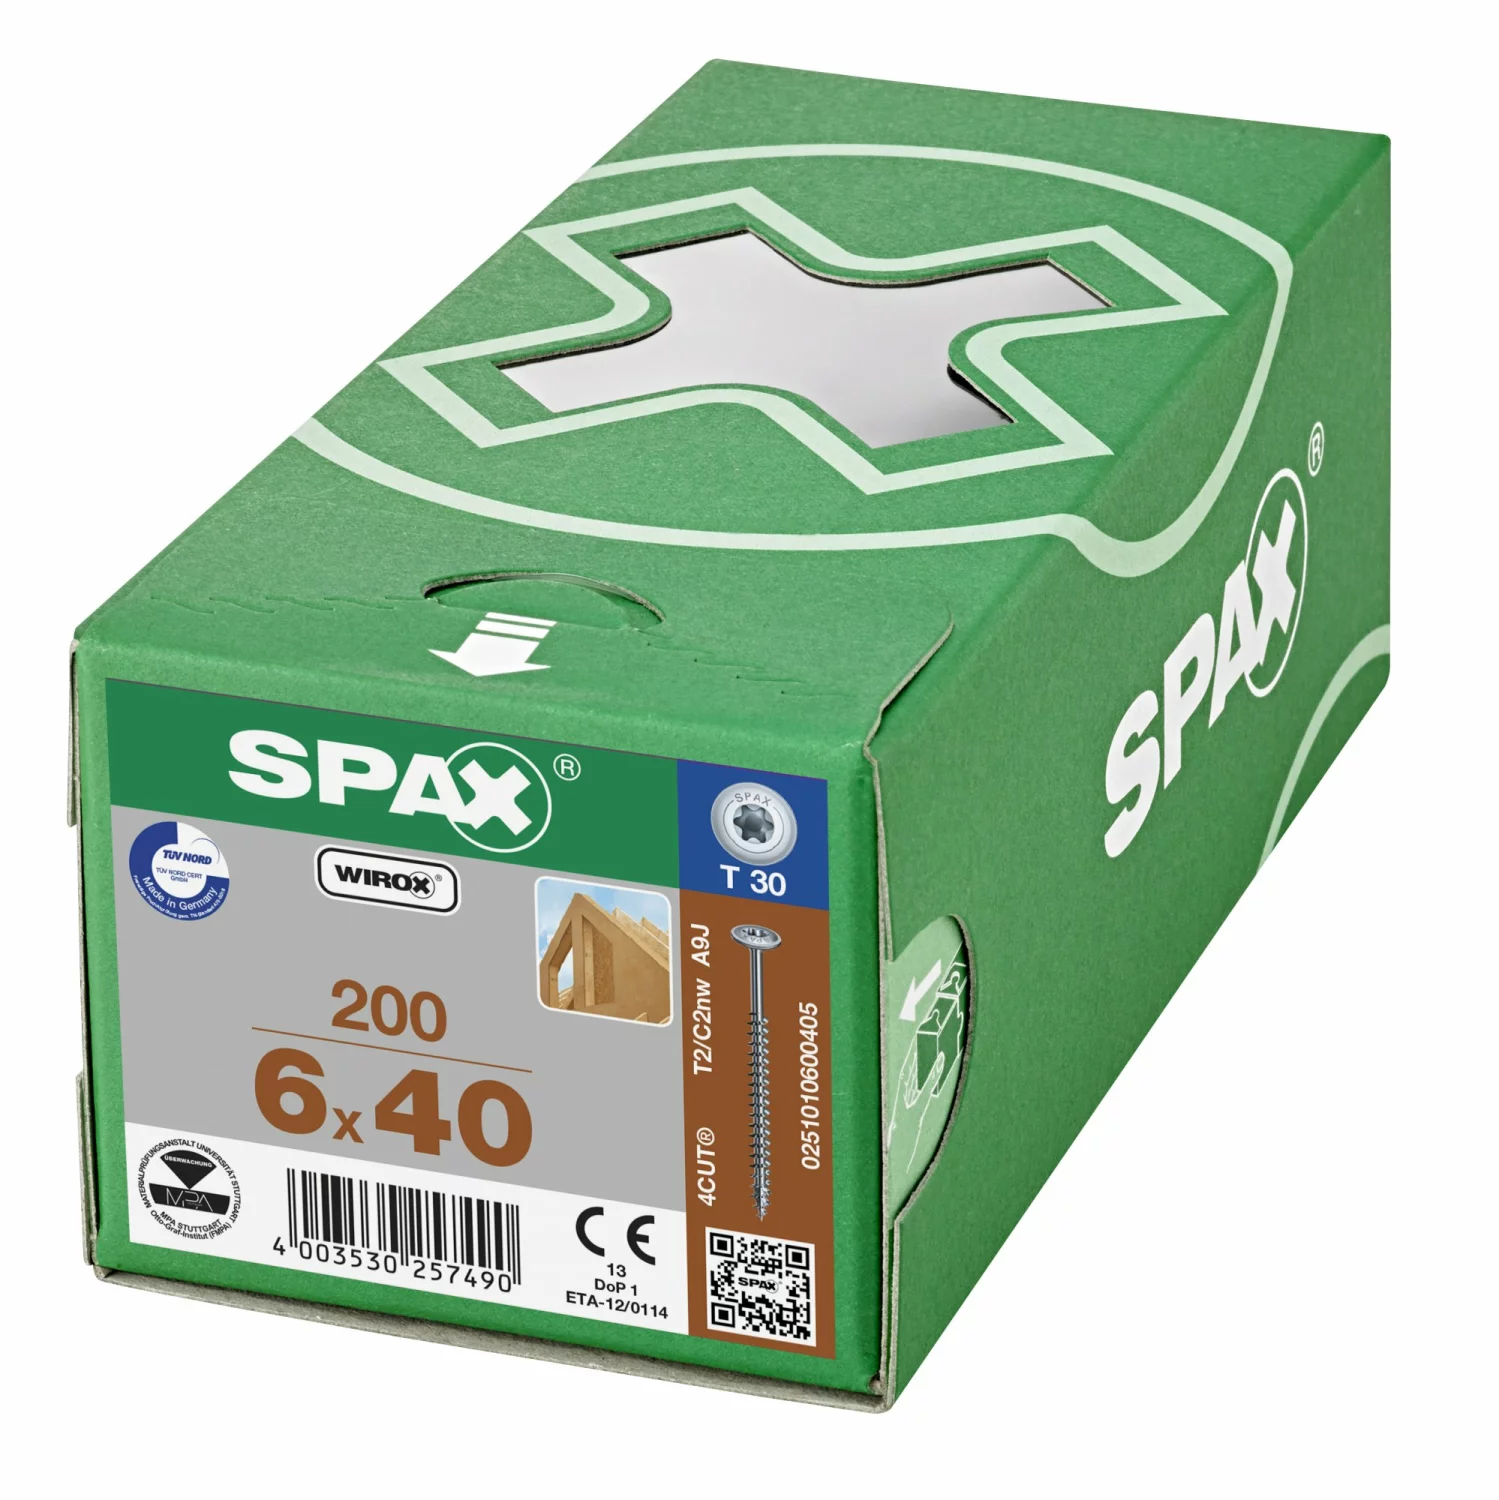 SPAX 251010600405 Hi-Force schroef, Discuskop, 6 x 40, Voldraad, T-STAR plus TX30 - WIROX - 200 stuks-image